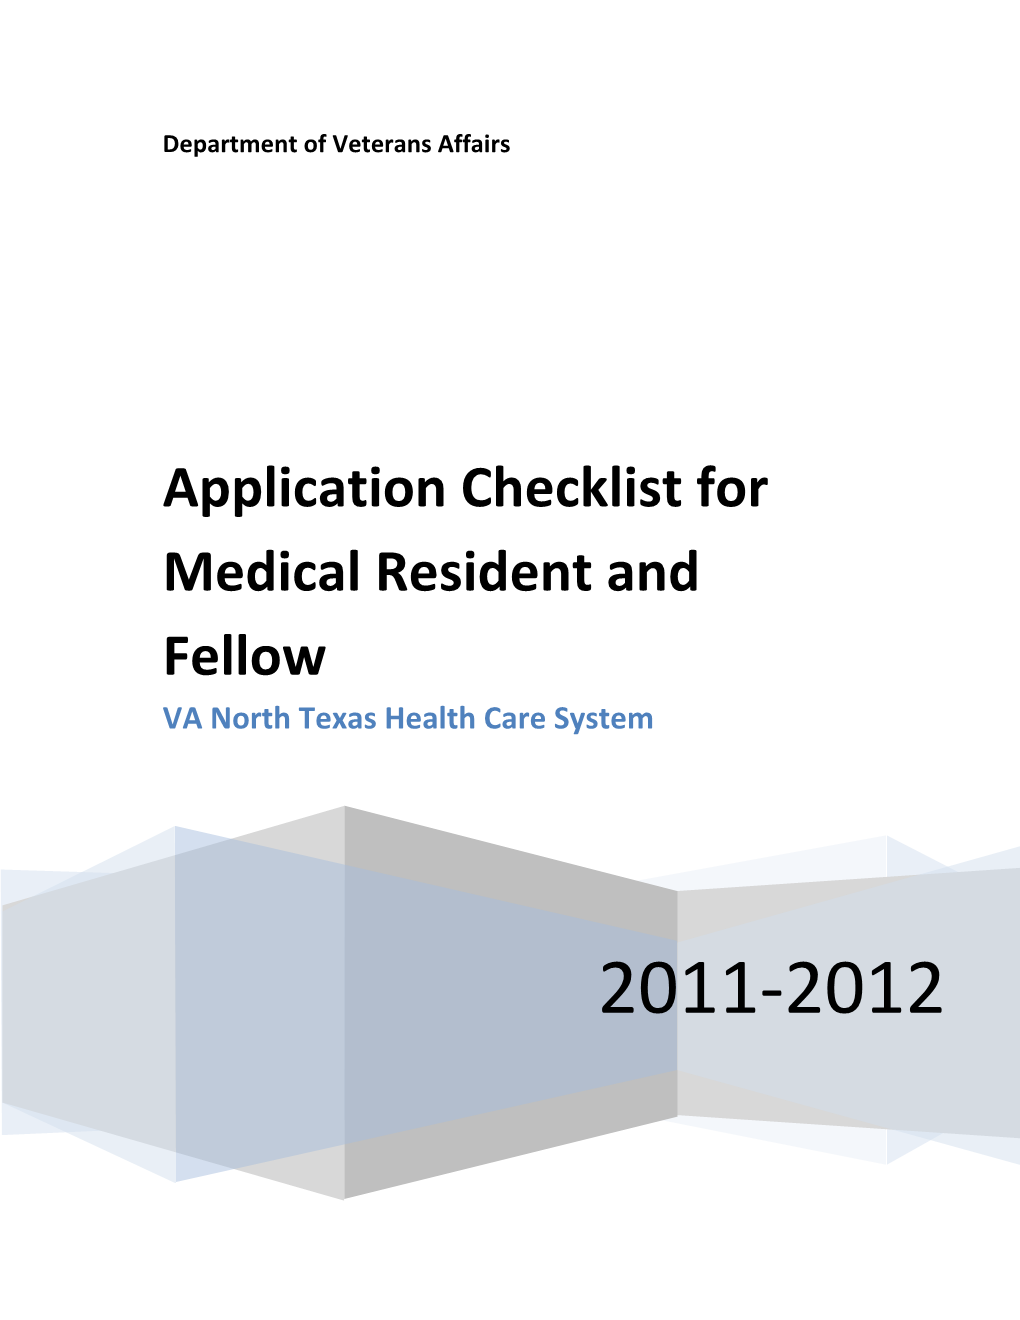 141 Application Checklist for Medical Resident-Fellow